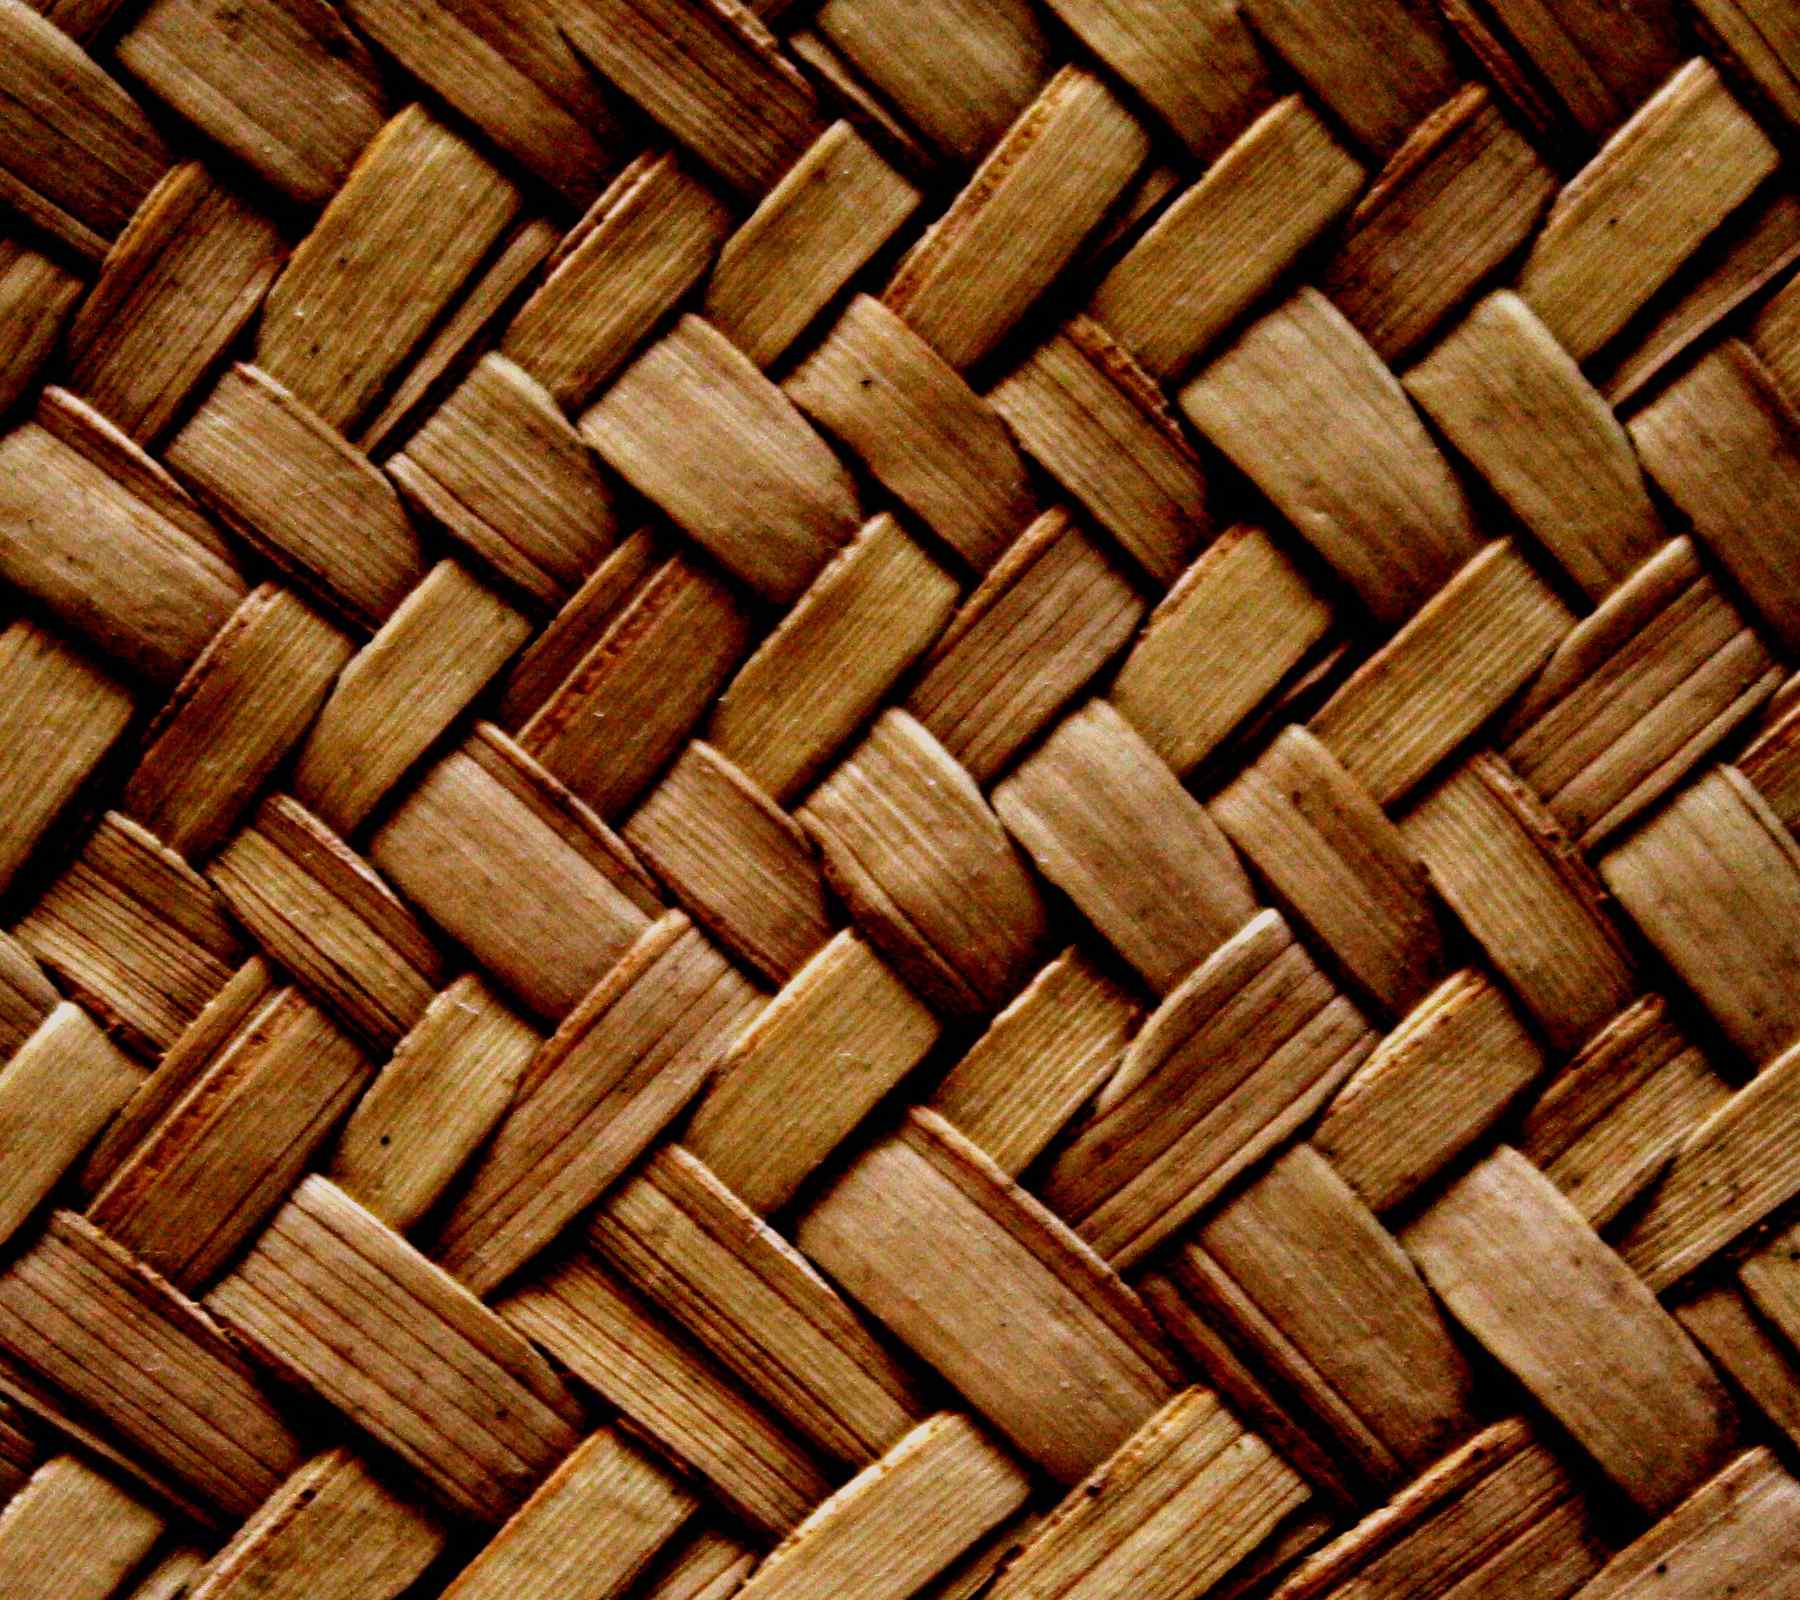 Woven Basket Background Image Wallpaper Or